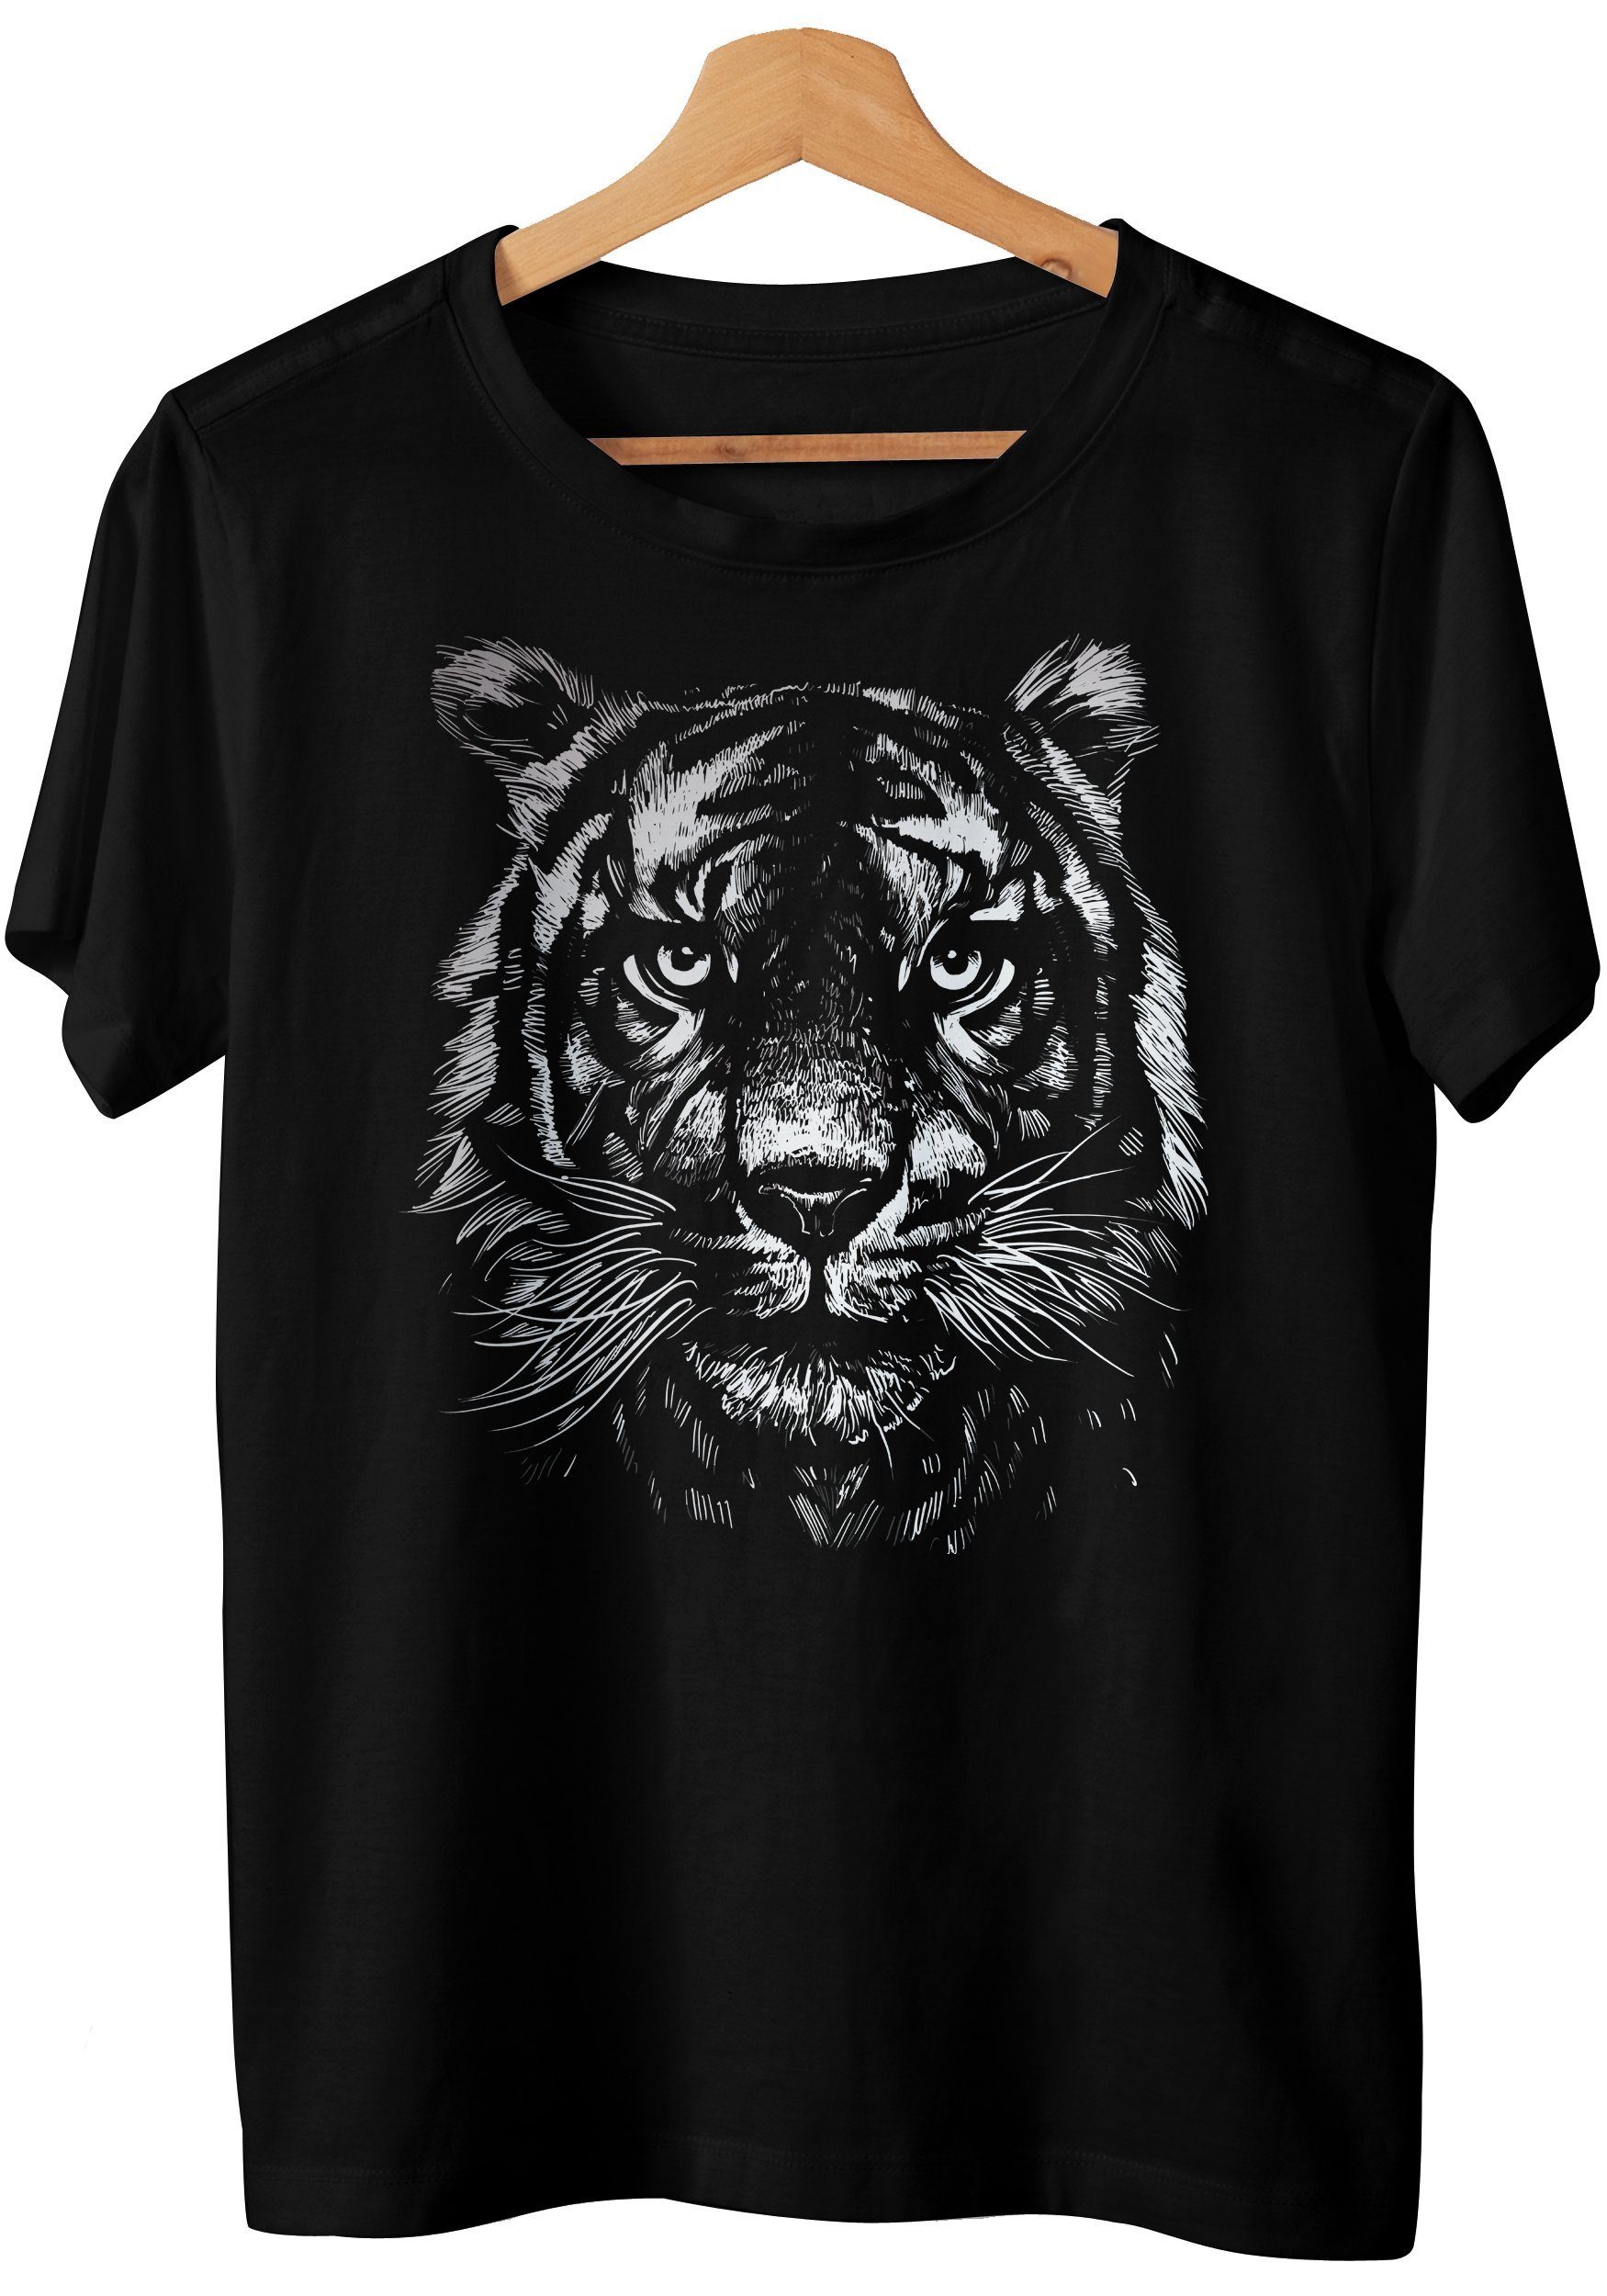 of Shirt Detail Tiger T-Shirt Art Tiger monochrome 2022 Design Year & Motiv 2022 the